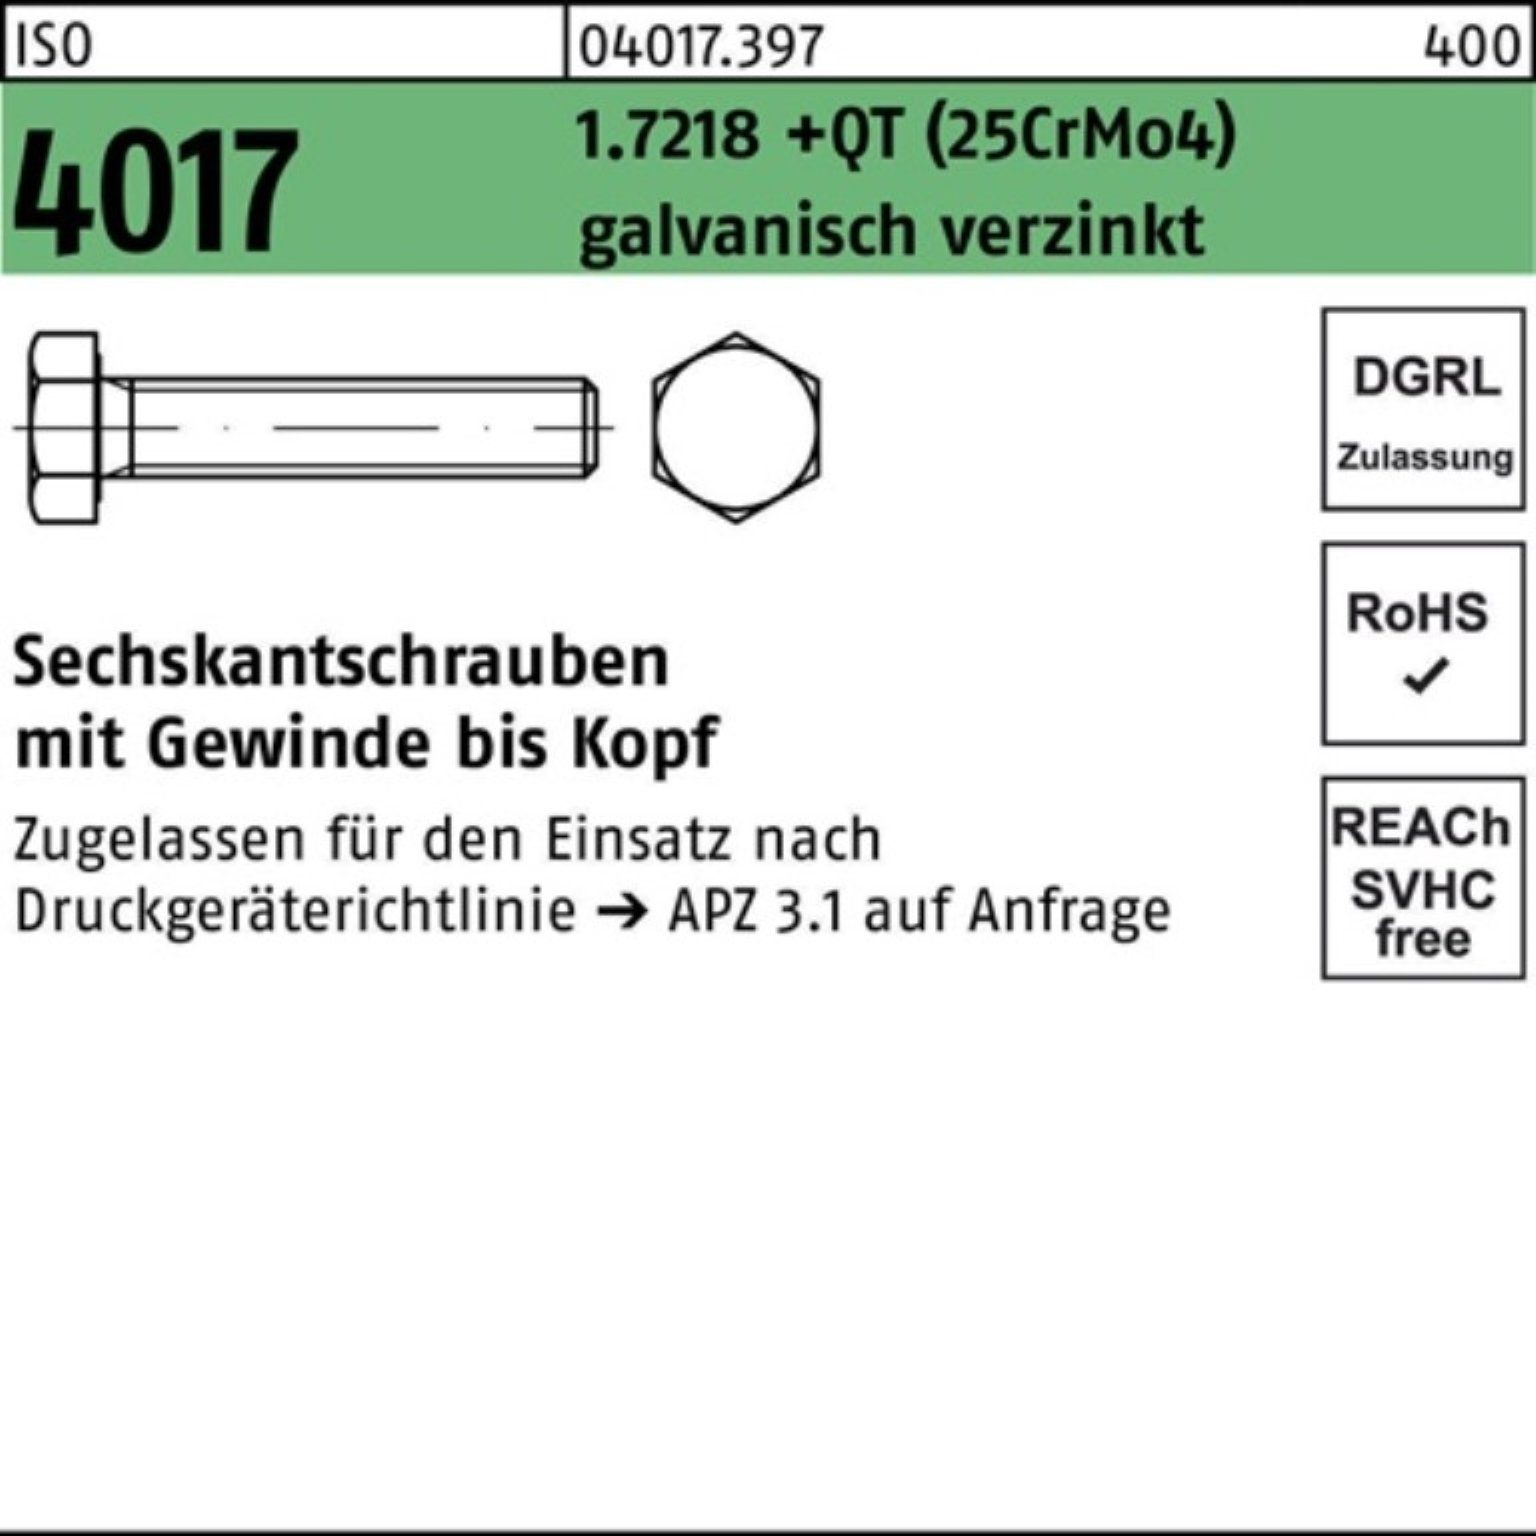 VG Sechskantschraube 100er Pack +QT (25CrMo4) M24x120 Sechskantschraube 4017 Bufab 1.7218 ISO